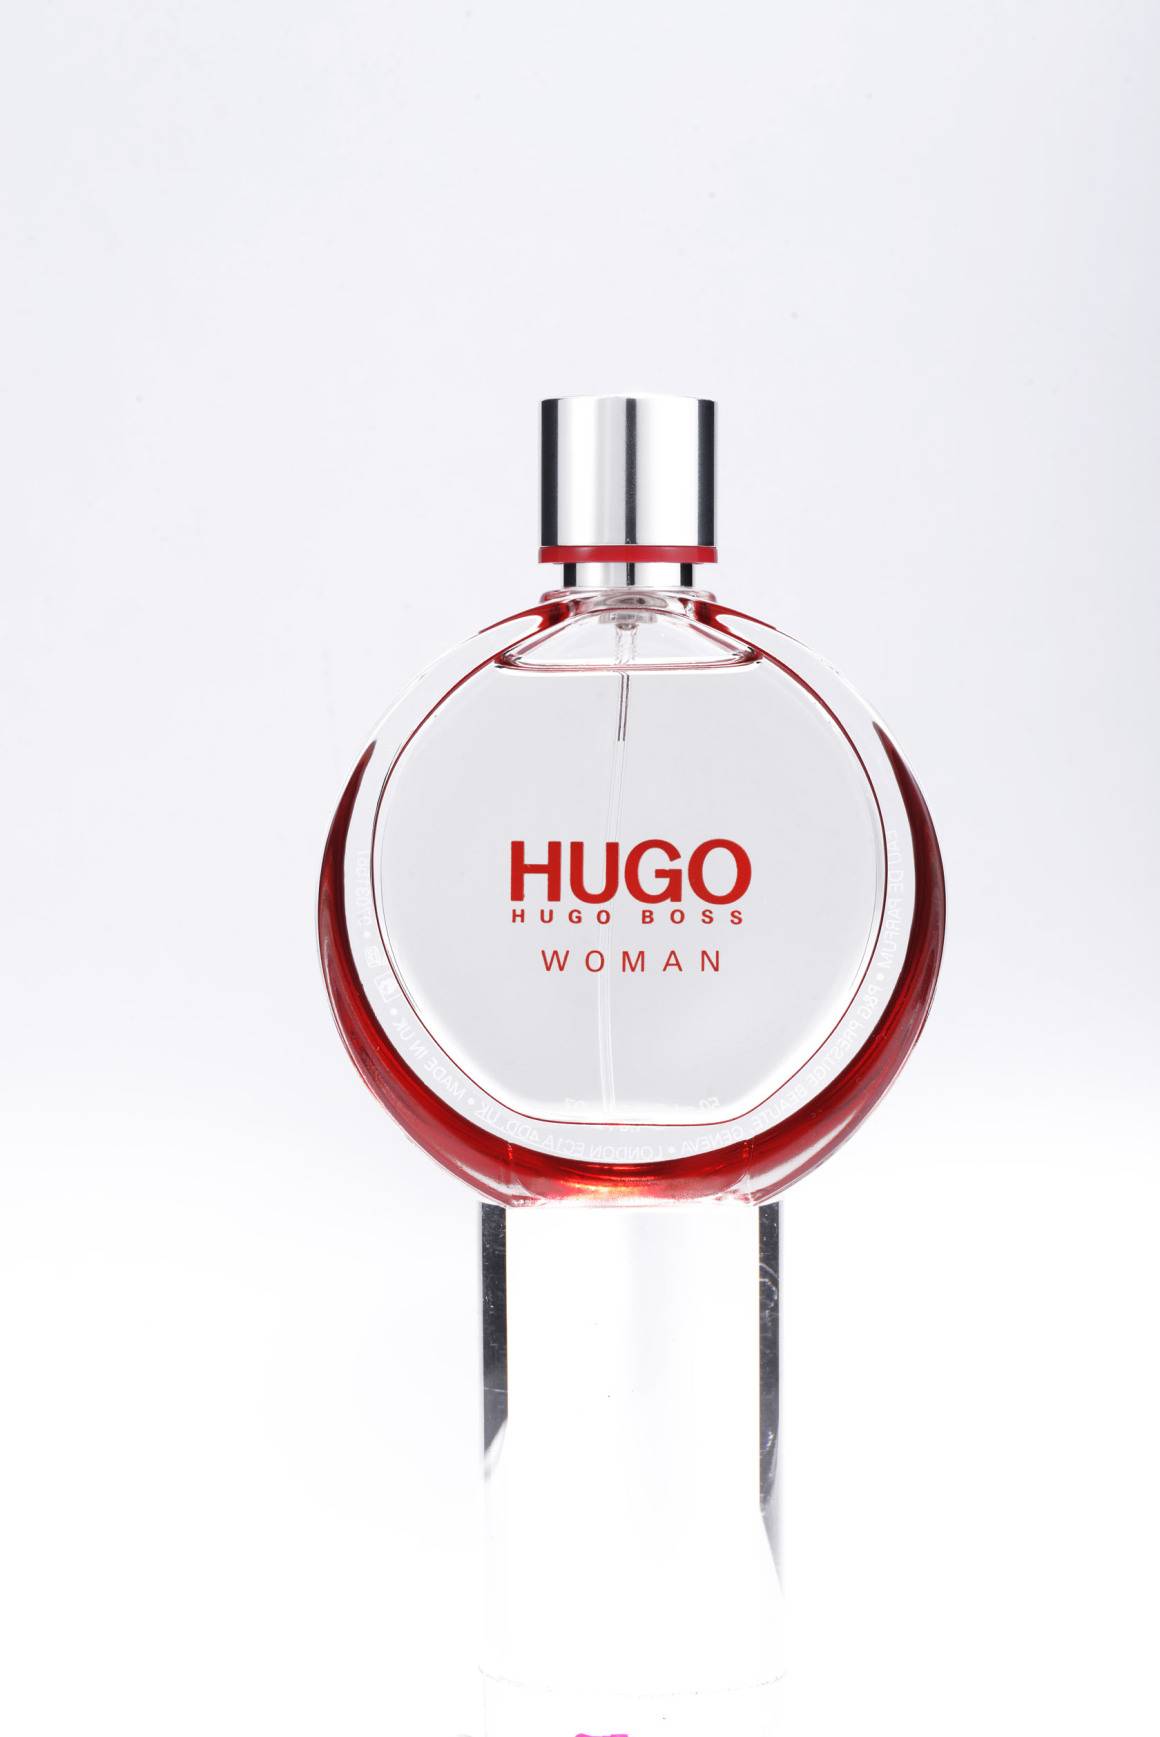 Hugo Woman EDP 揉合經典花果香氣，與傳統的中性氣息，並增添天然成分，打造獨特的女士香氛。$420/30ml、$605/50ml、$775/75ml 